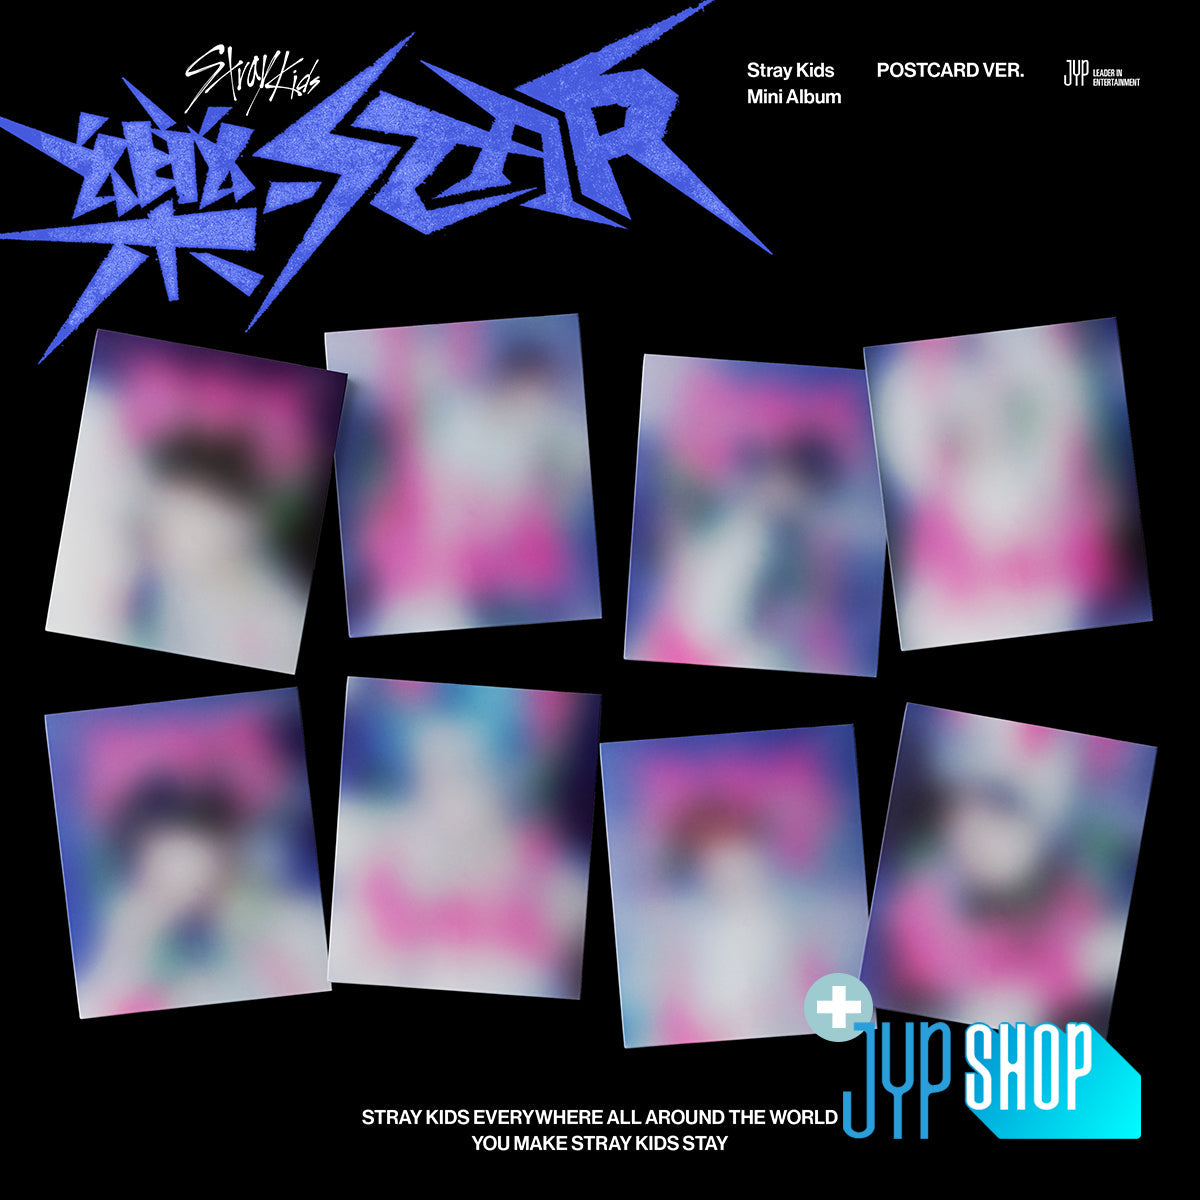 Stray Kids - 樂-STAR (ROCK-STAR) (POSTCARD ver.) (Random) + JYP SHOP P.O.B